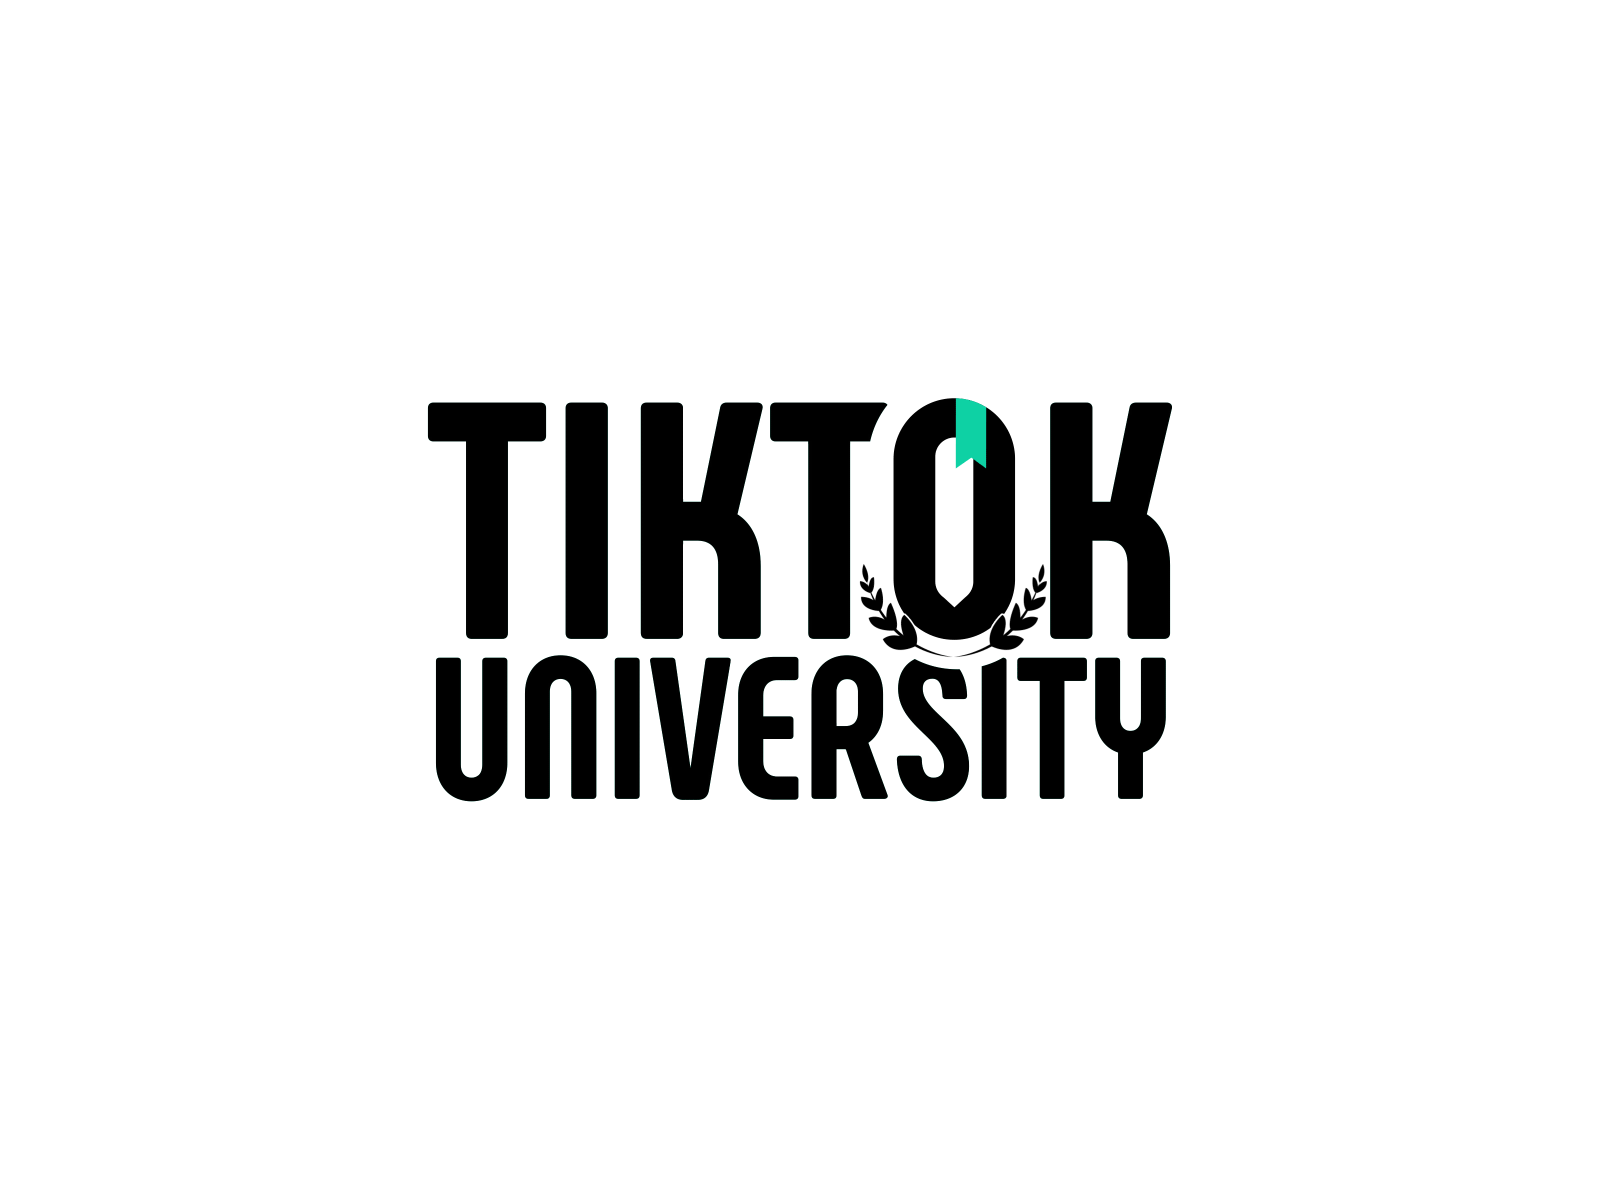 Tiktok University - Logo animation by Ashot S. on Dribbble